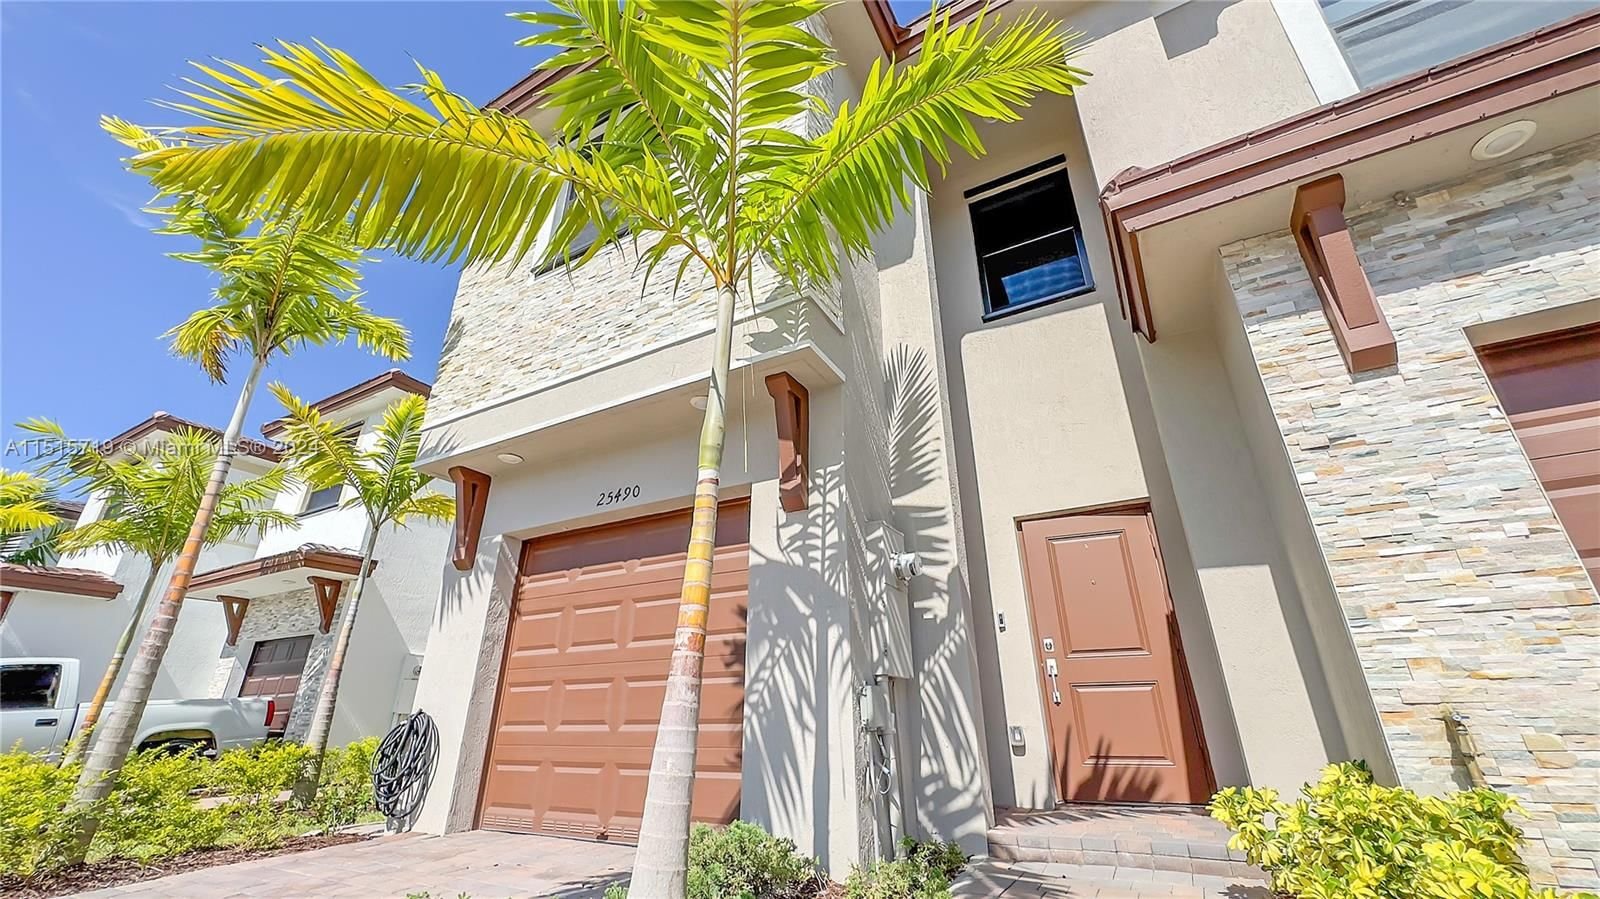 Real estate property located at 25490 108th Ct, Miami-Dade County, ALLAPATTAH GDNS, Homestead, FL